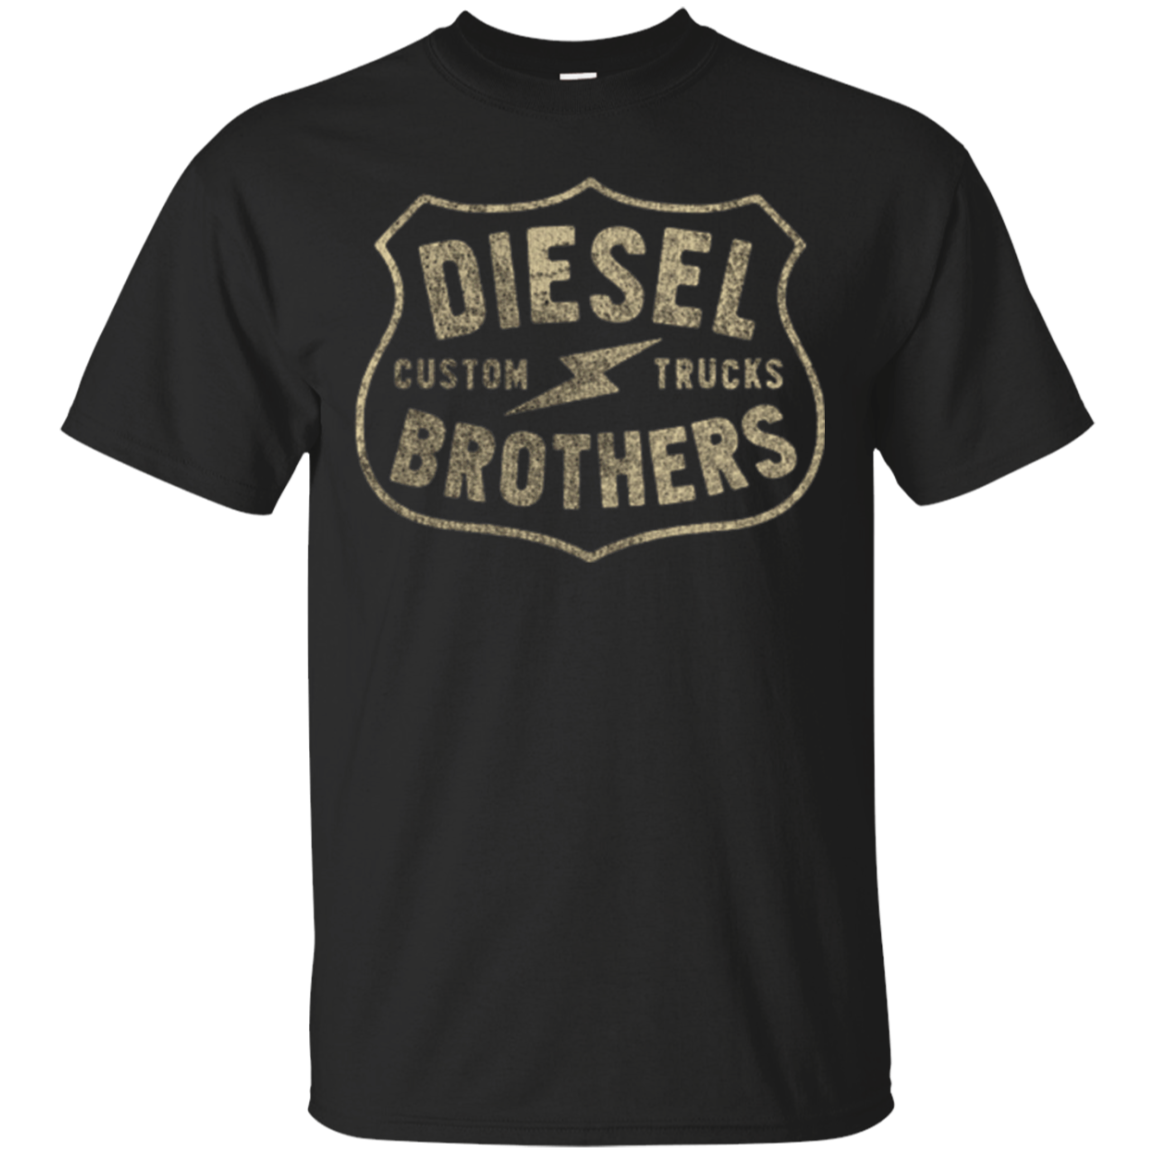 Diesel Brothers Custom Trucks Vintage Sign Graphic T-shirt